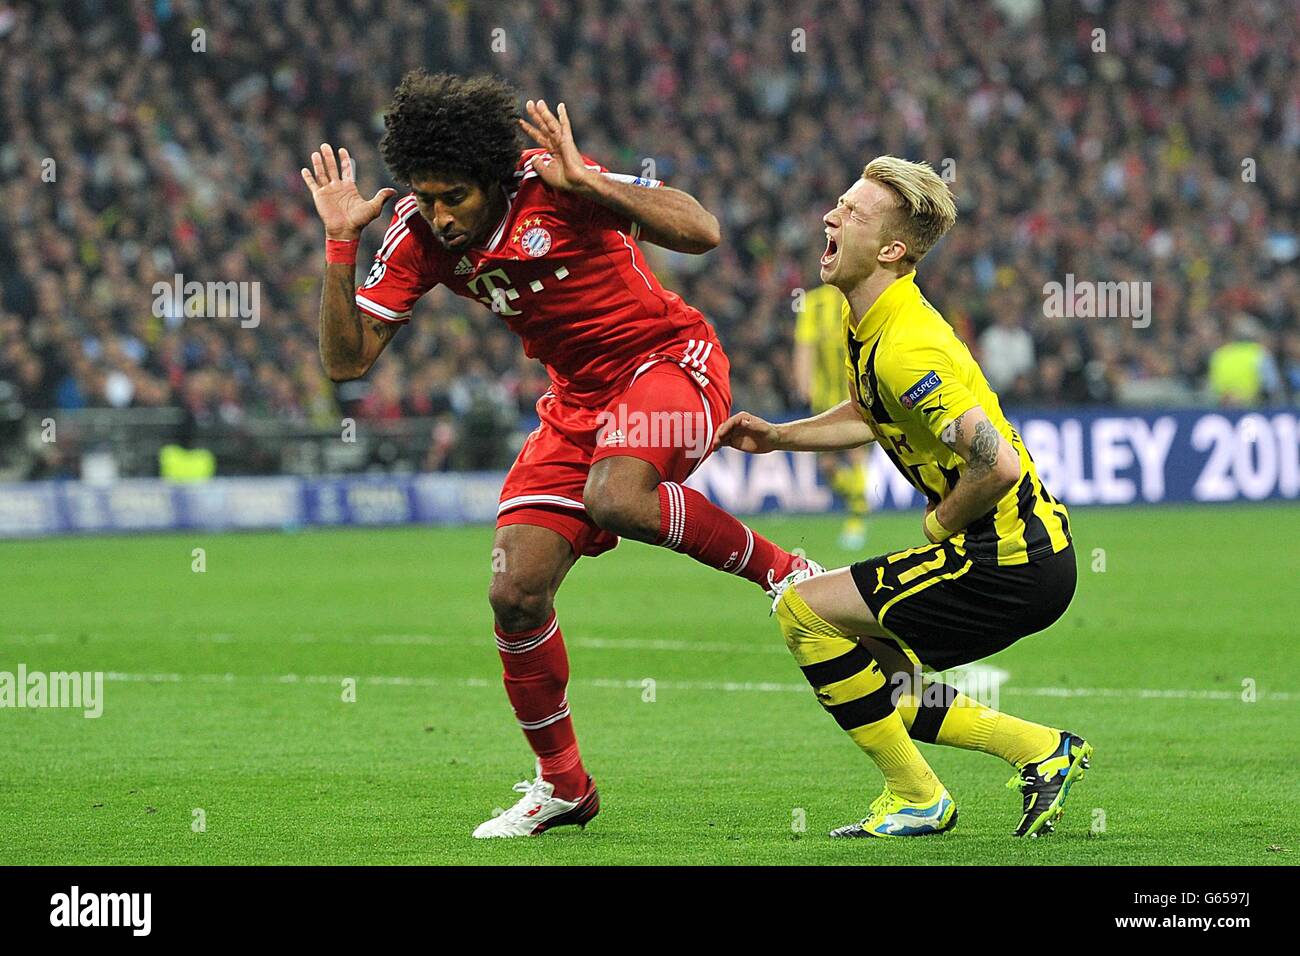 Soccer - UEFA Champions League - Final - Borussia Dortmund v Bayern Munich  - Wembley Stadium. Bayern Munich's Bonfim Dante (